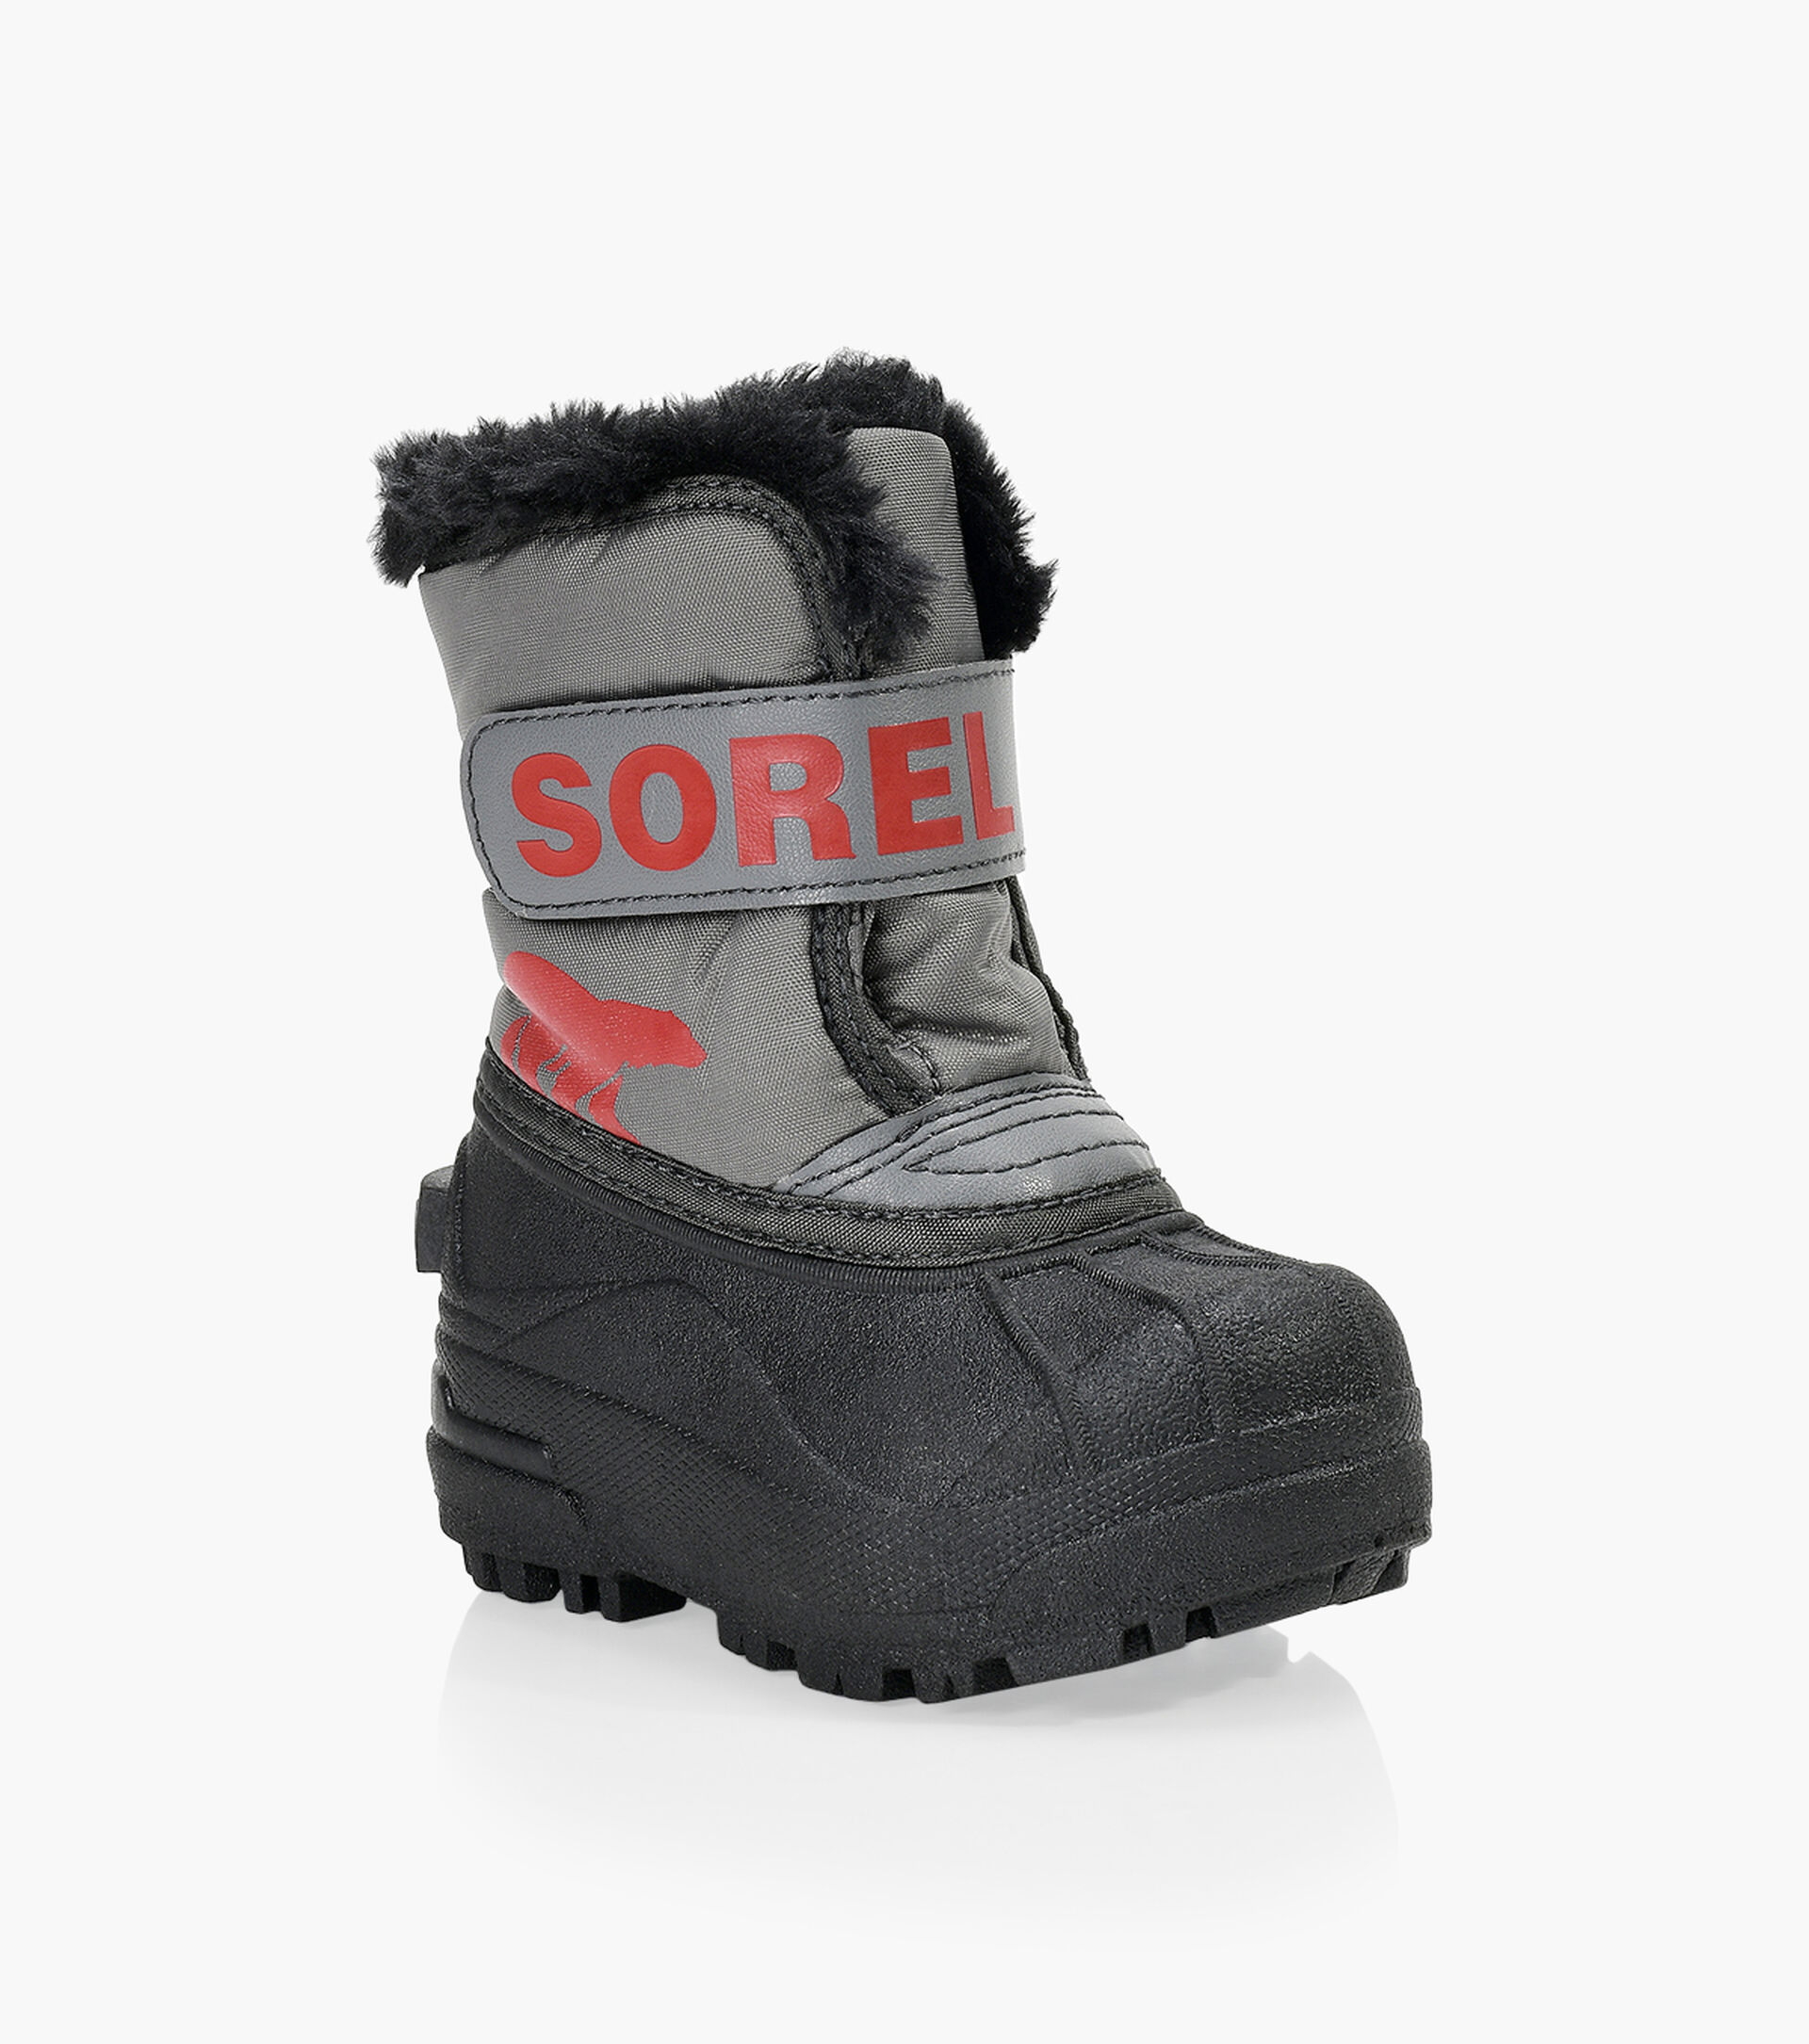 SOREL SNOW COMMANDER | Browns Shoes